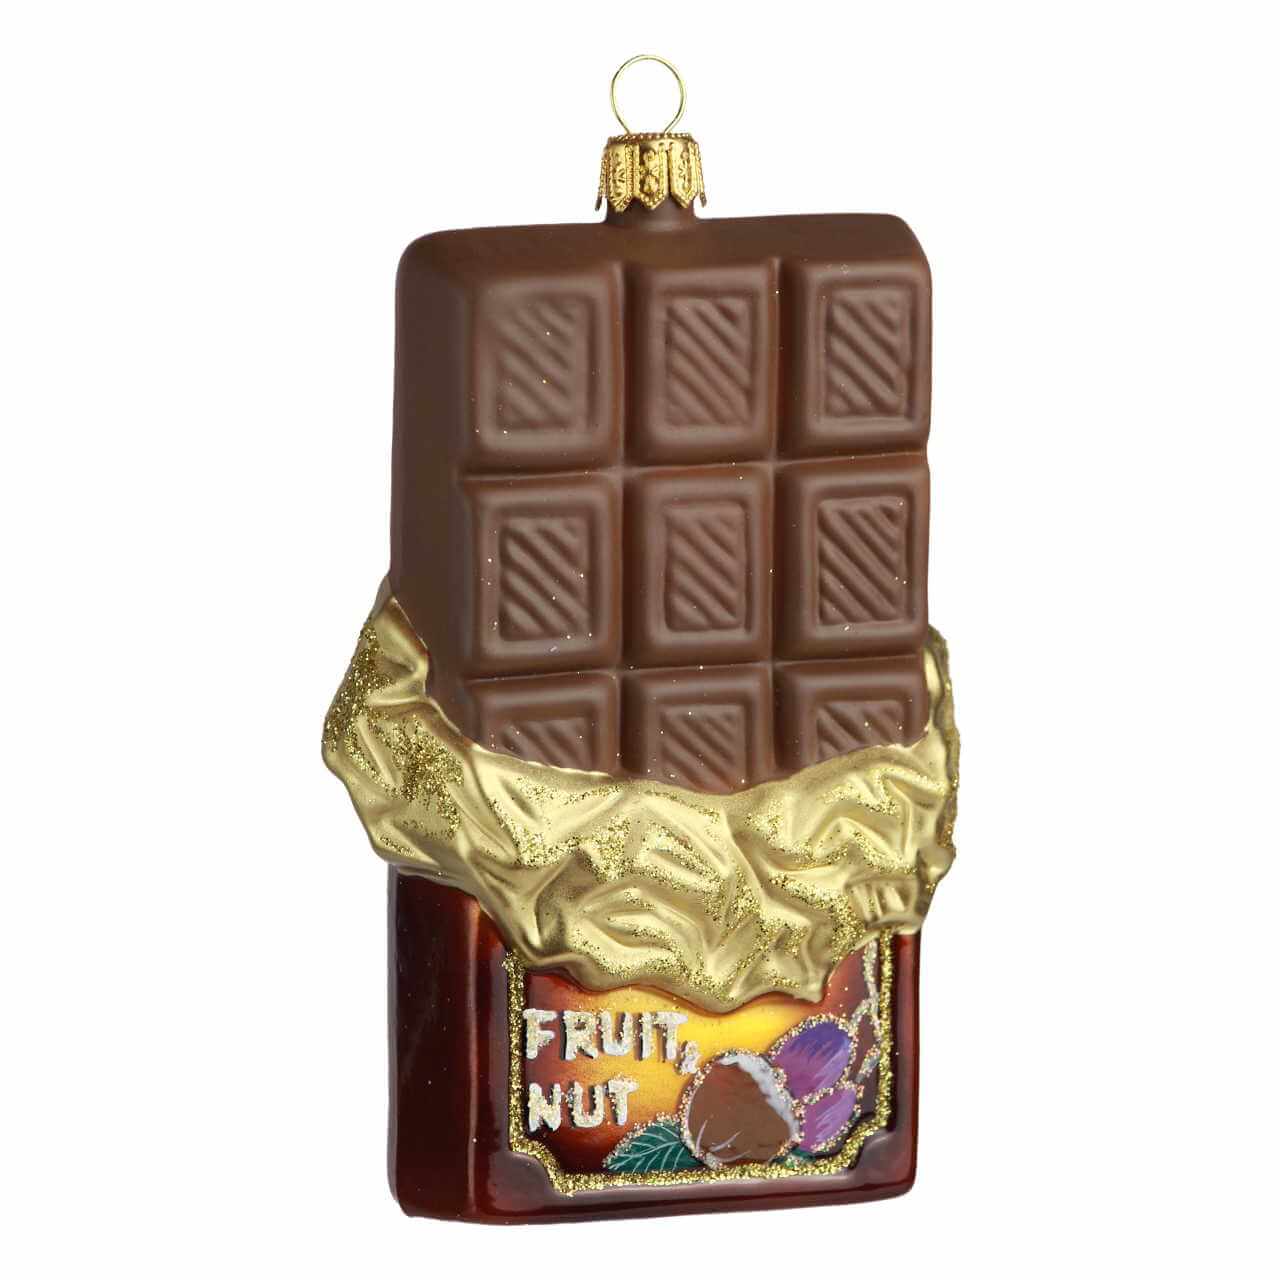 Chocolate bar